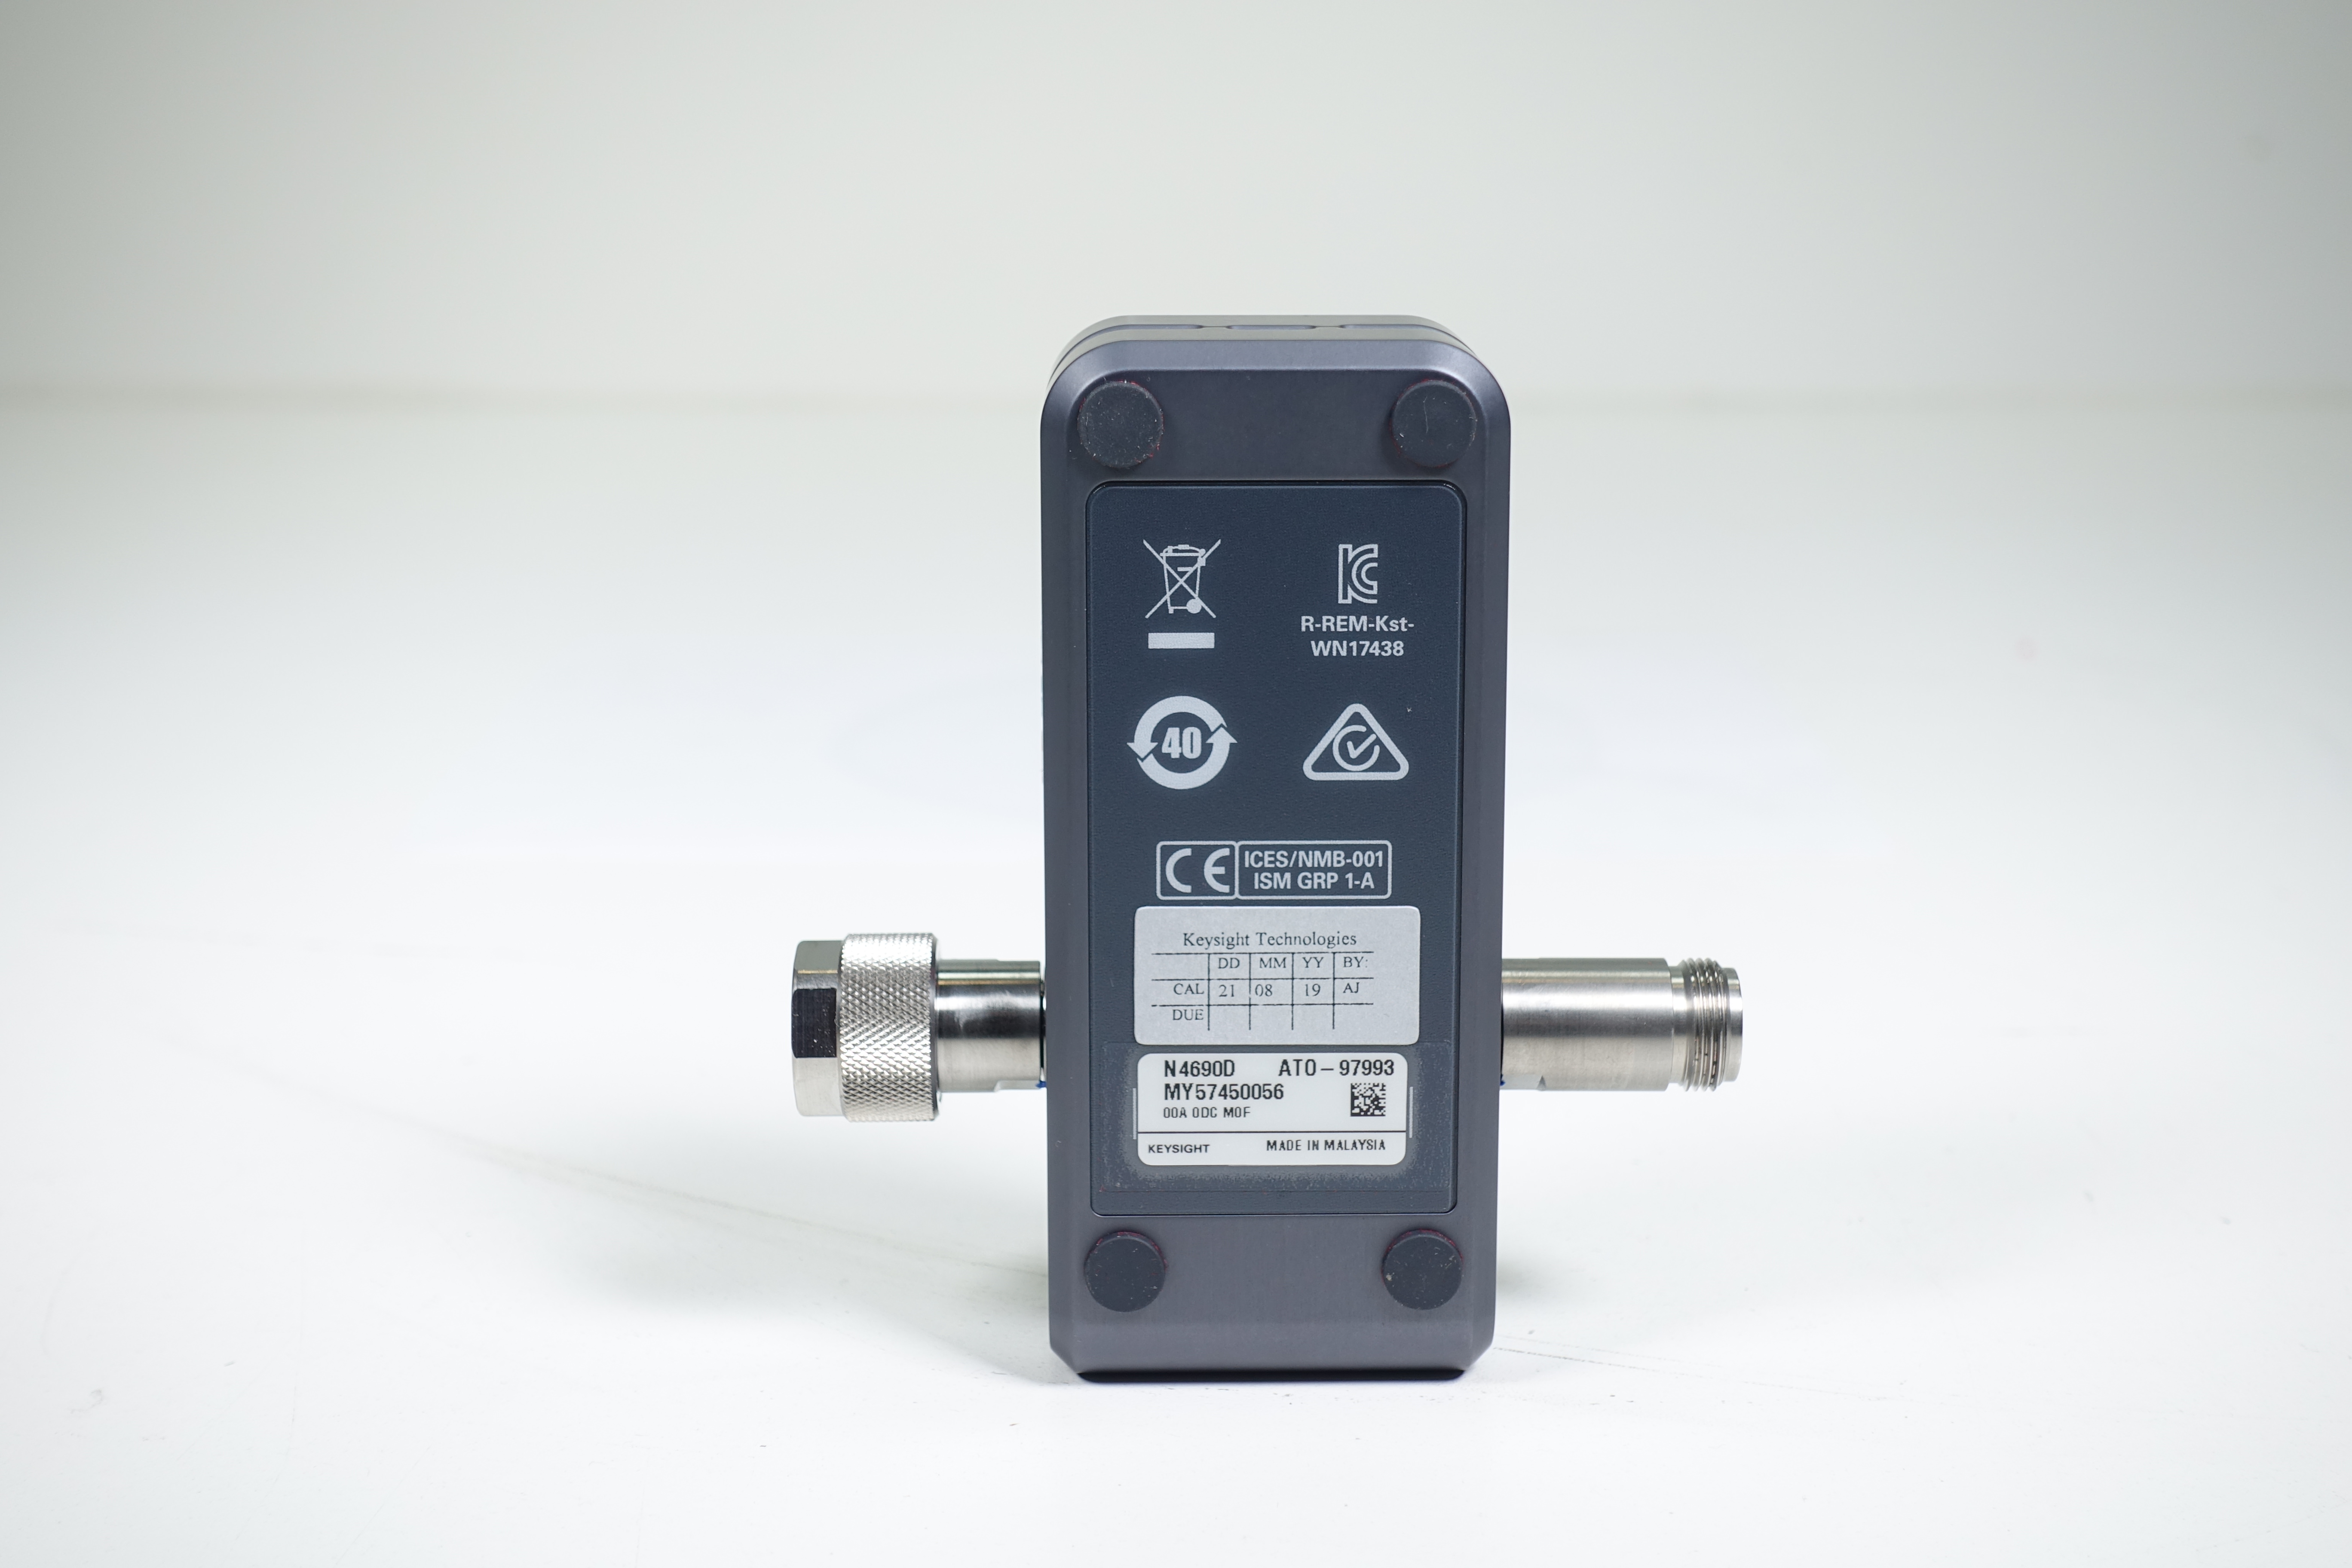 Keysight N4690D Electronic Calibration Module (ECal) / Type-N / 50 ohm / 2-port